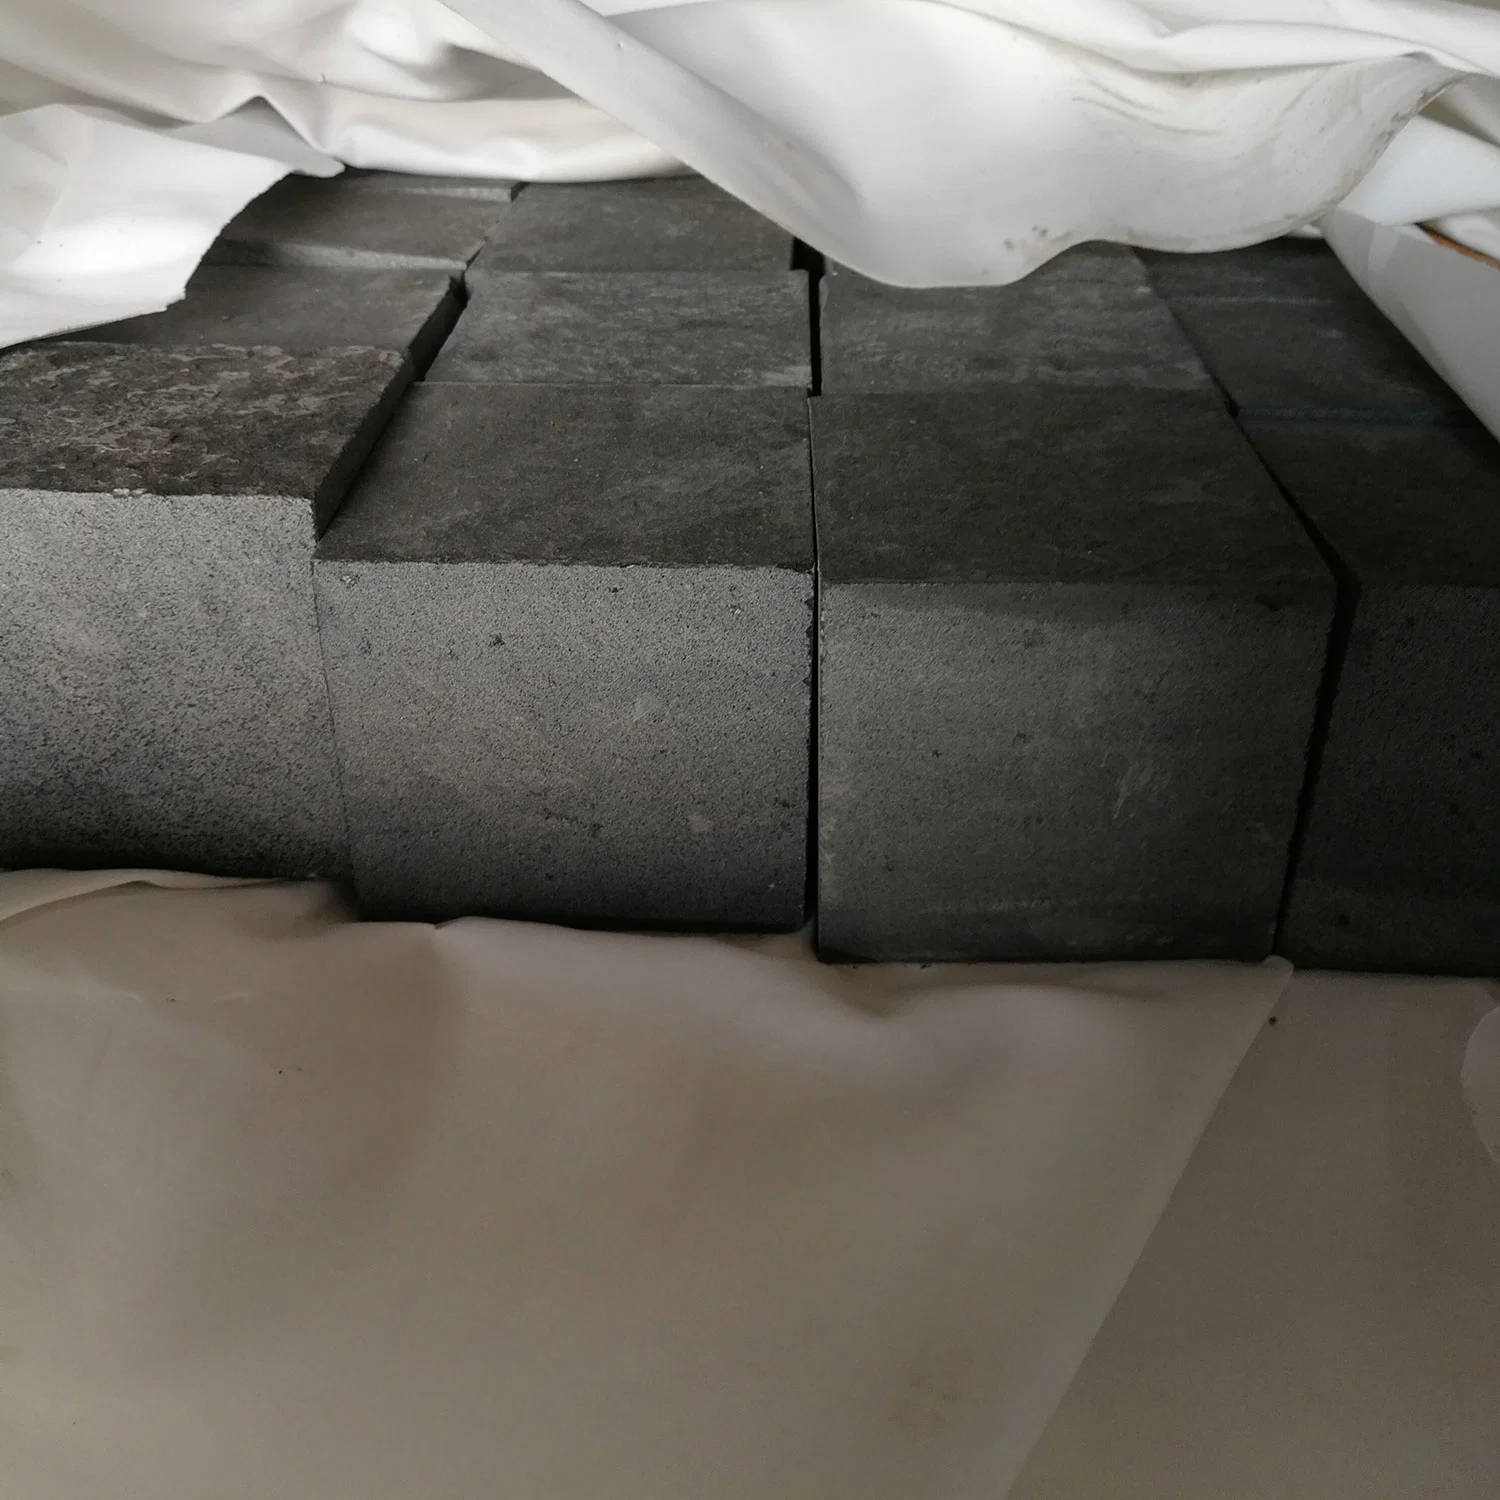 Flamed Surface China Black Mongolia Black Stone Granite Paving for Flooring Tiles